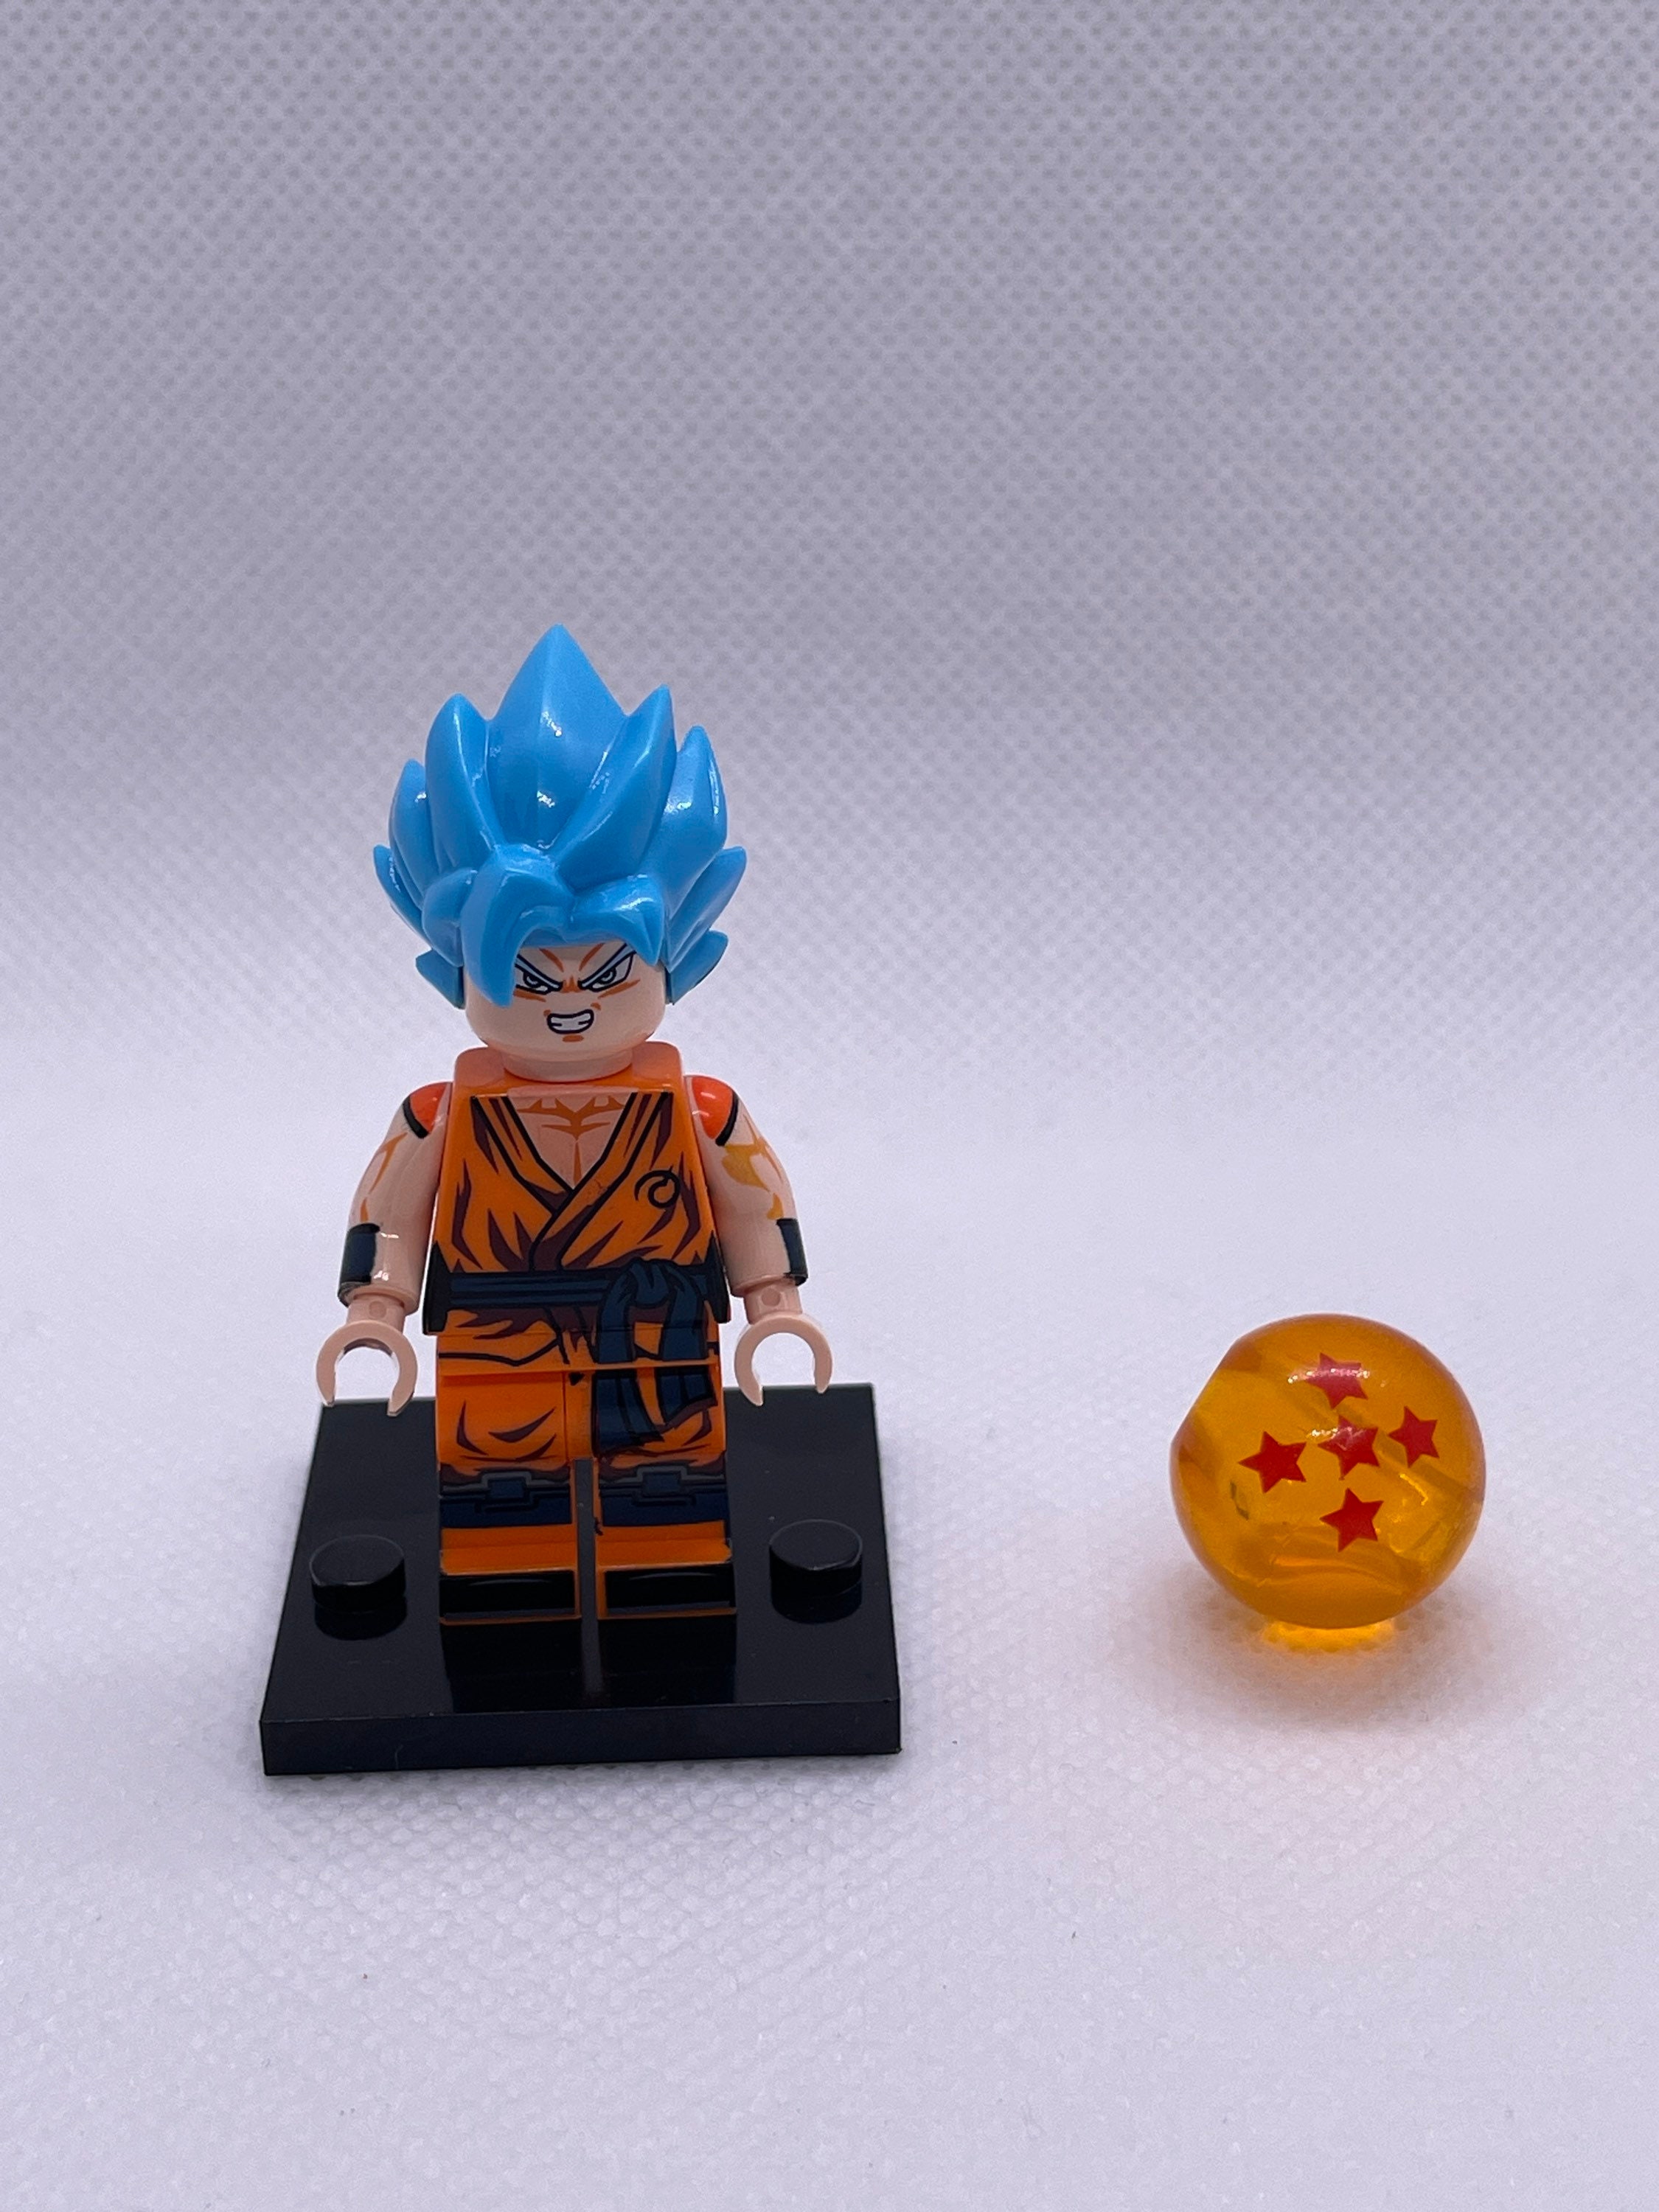 Dragon Ball Z Saiyan Goku Lego Minifigure - BlockMasters Shop